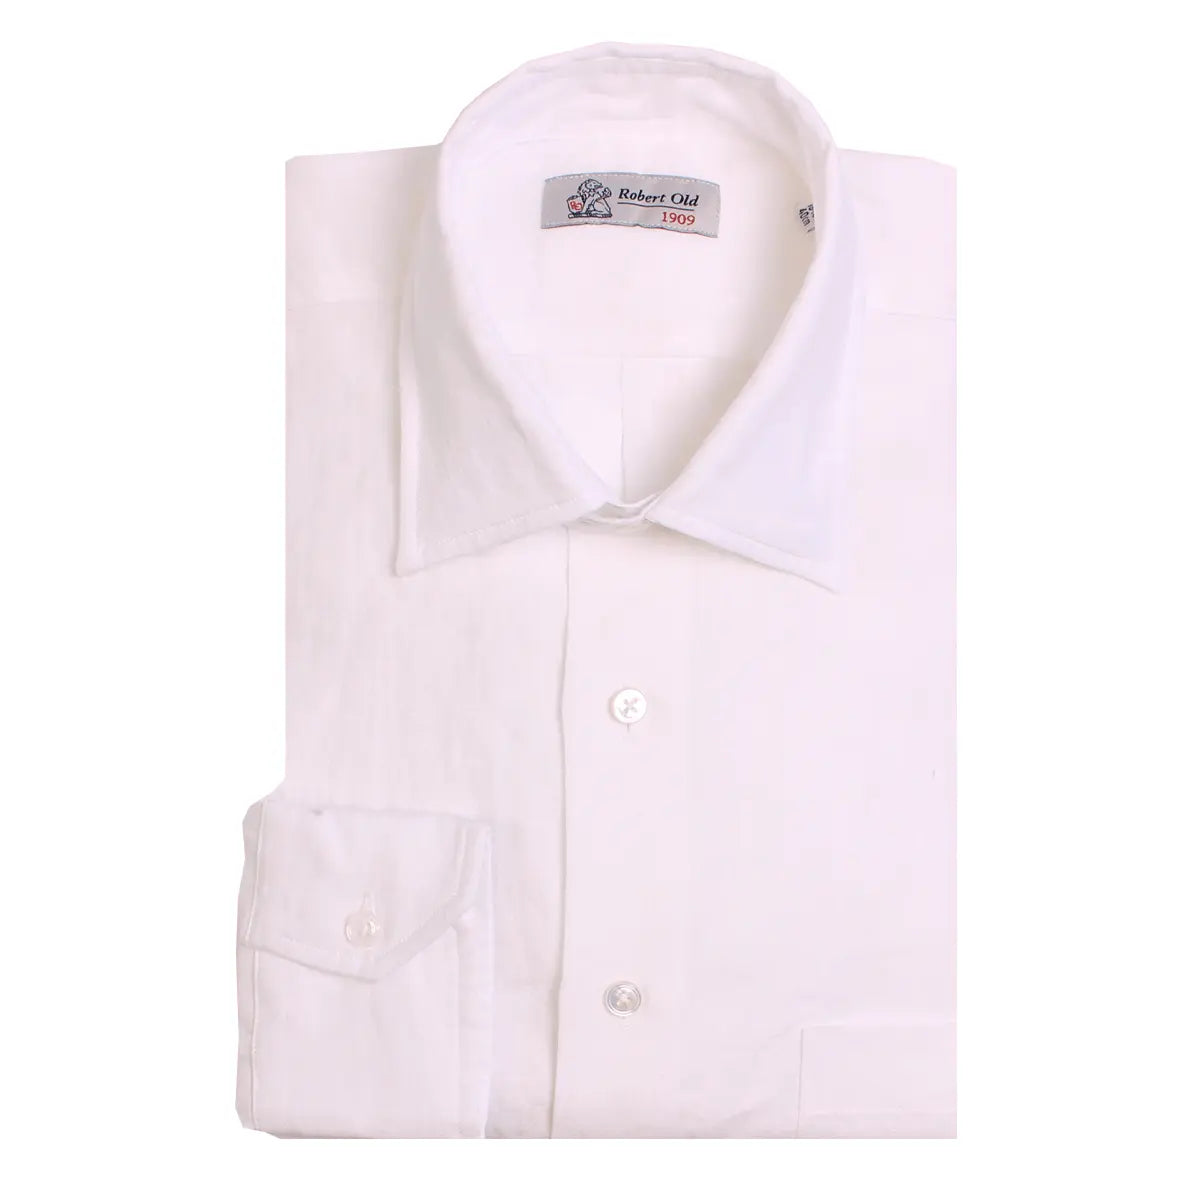 White Irish Linen Long Sleeve Shirt  Robert Old   